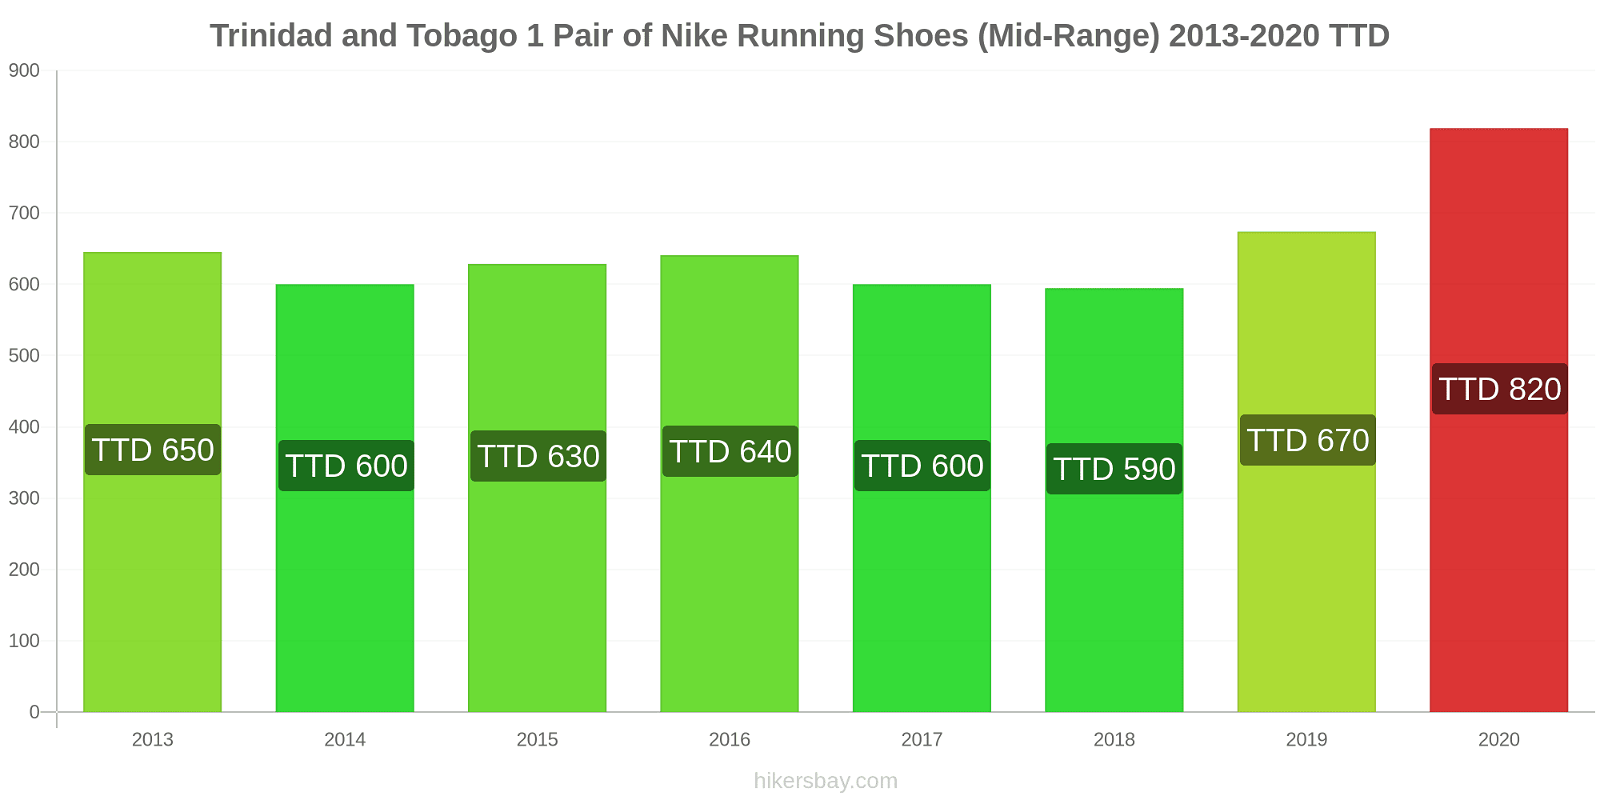 Trinidad and Tobago price changes 1 Pair of Nike Running Shoes (Mid-Range) hikersbay.com